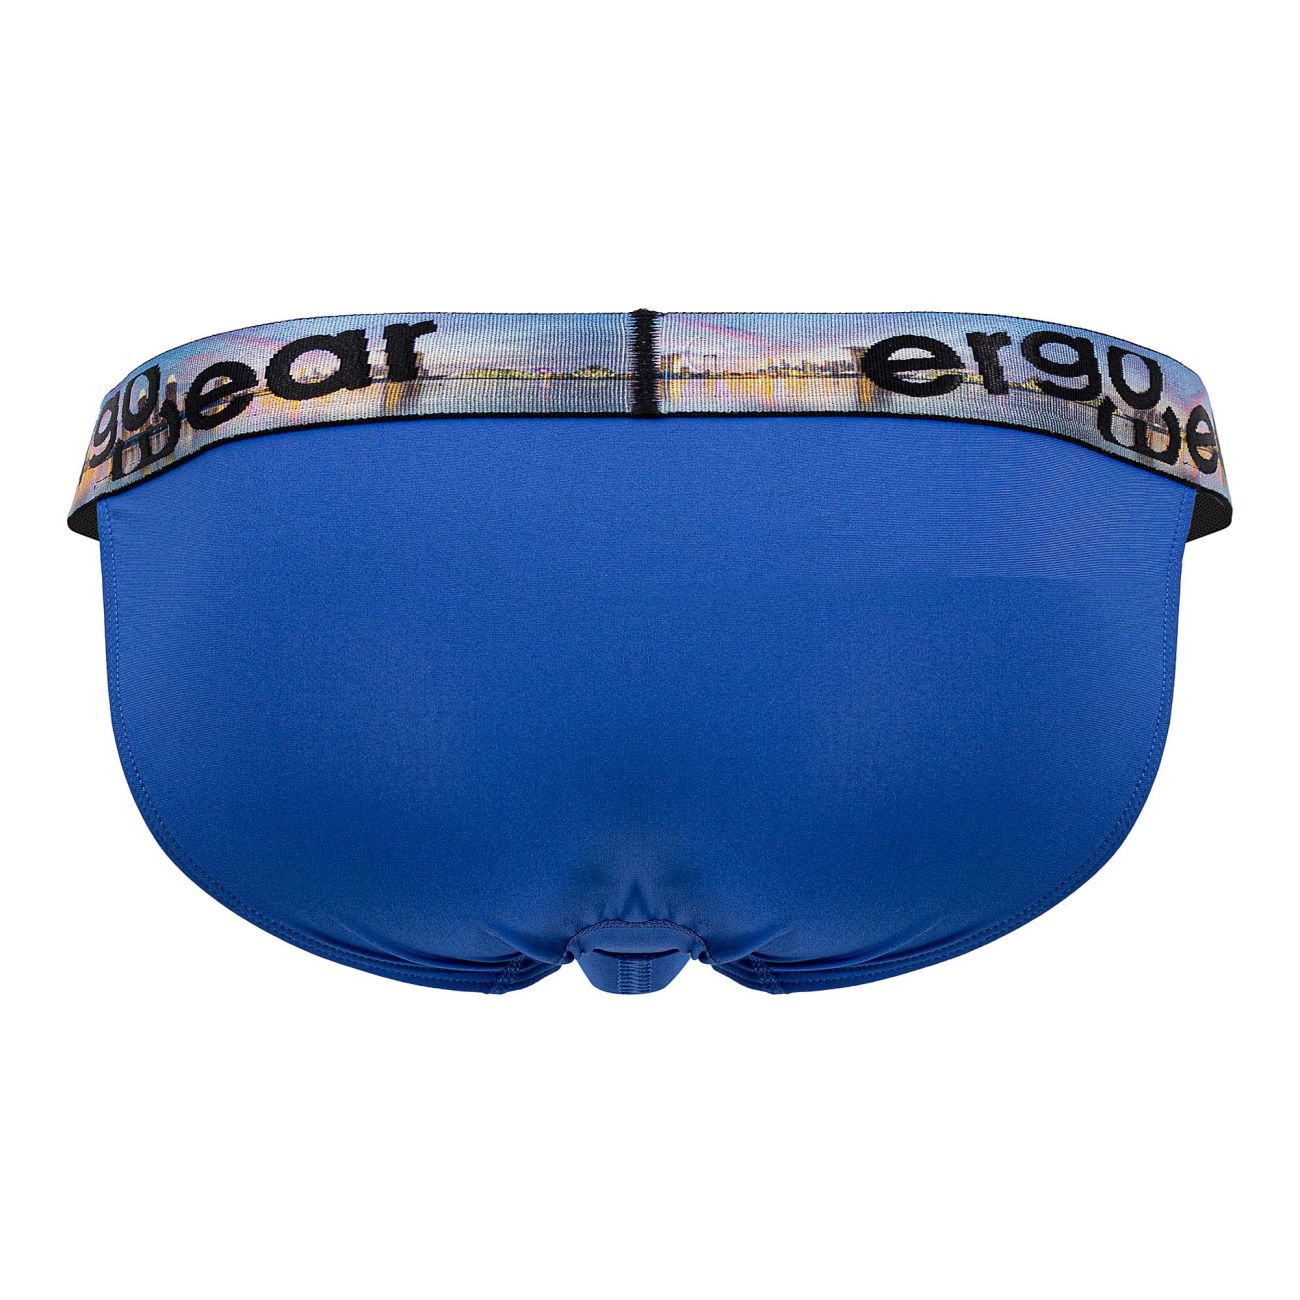 ErgoWear EW1462 MAX SE Bikini Blue